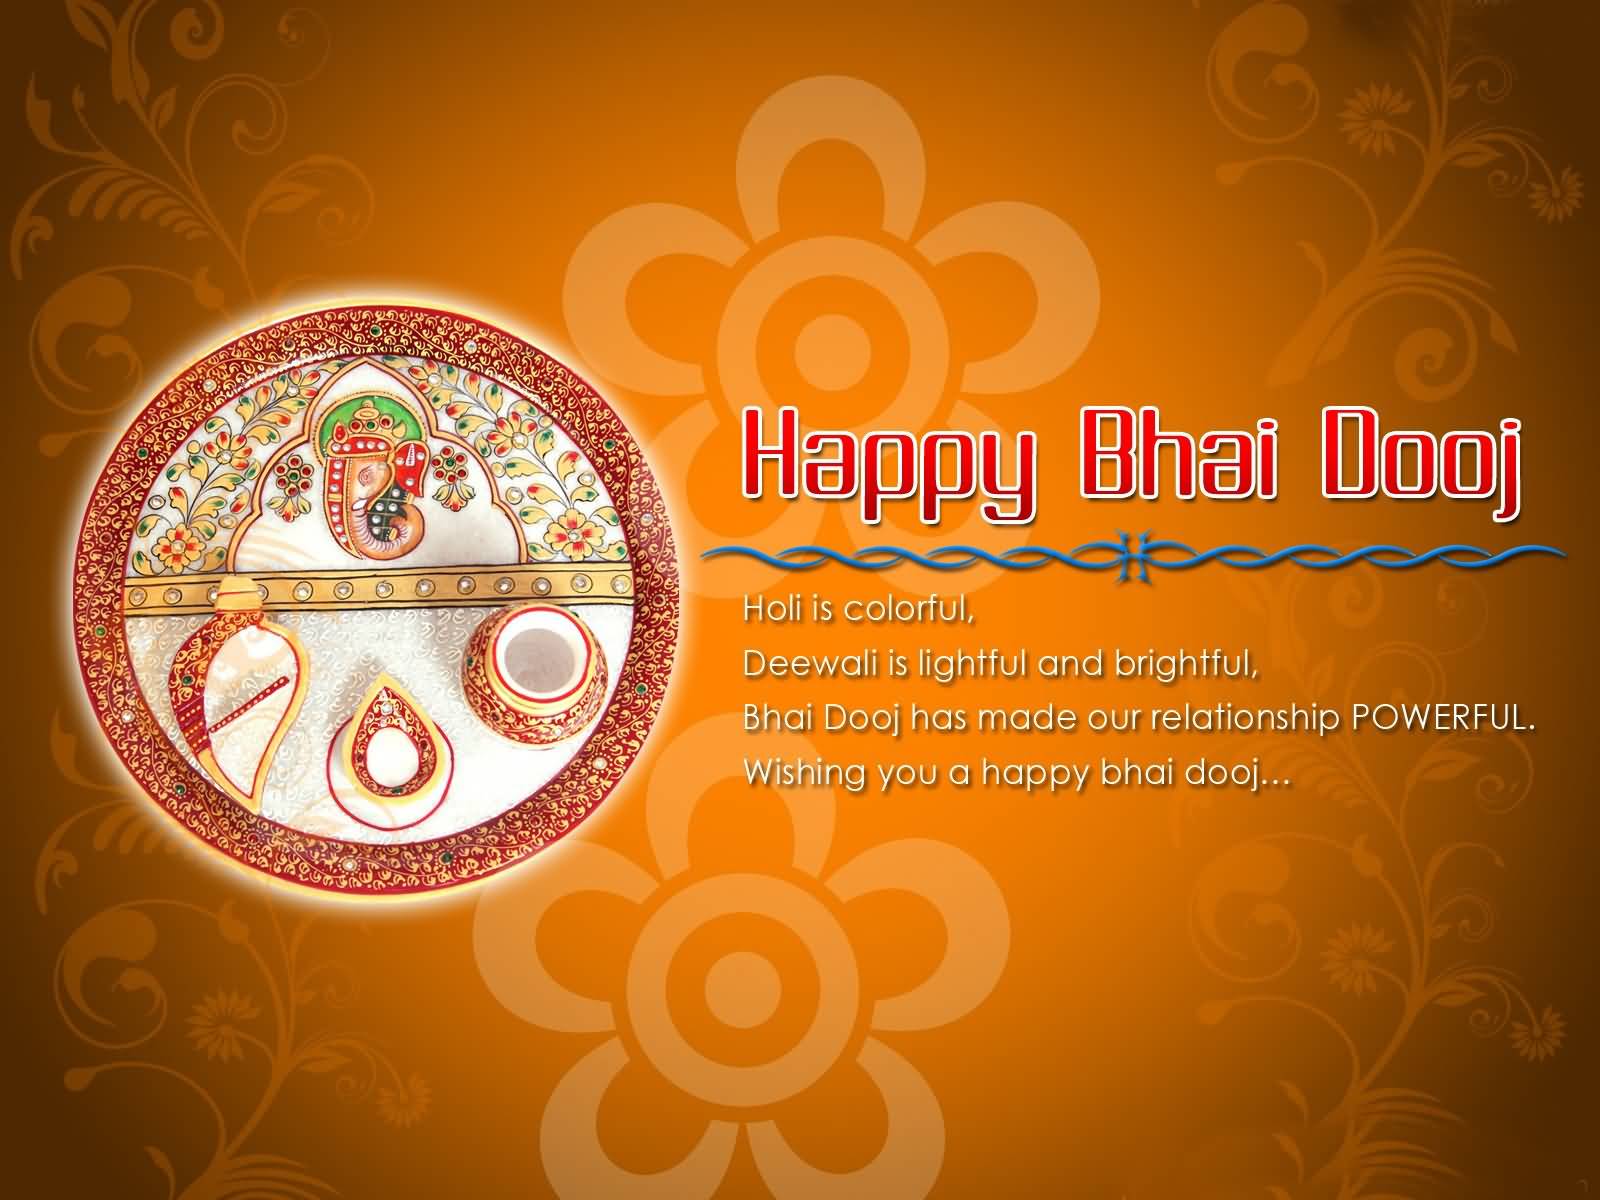 Wishing You A Happy Bhai Dooj